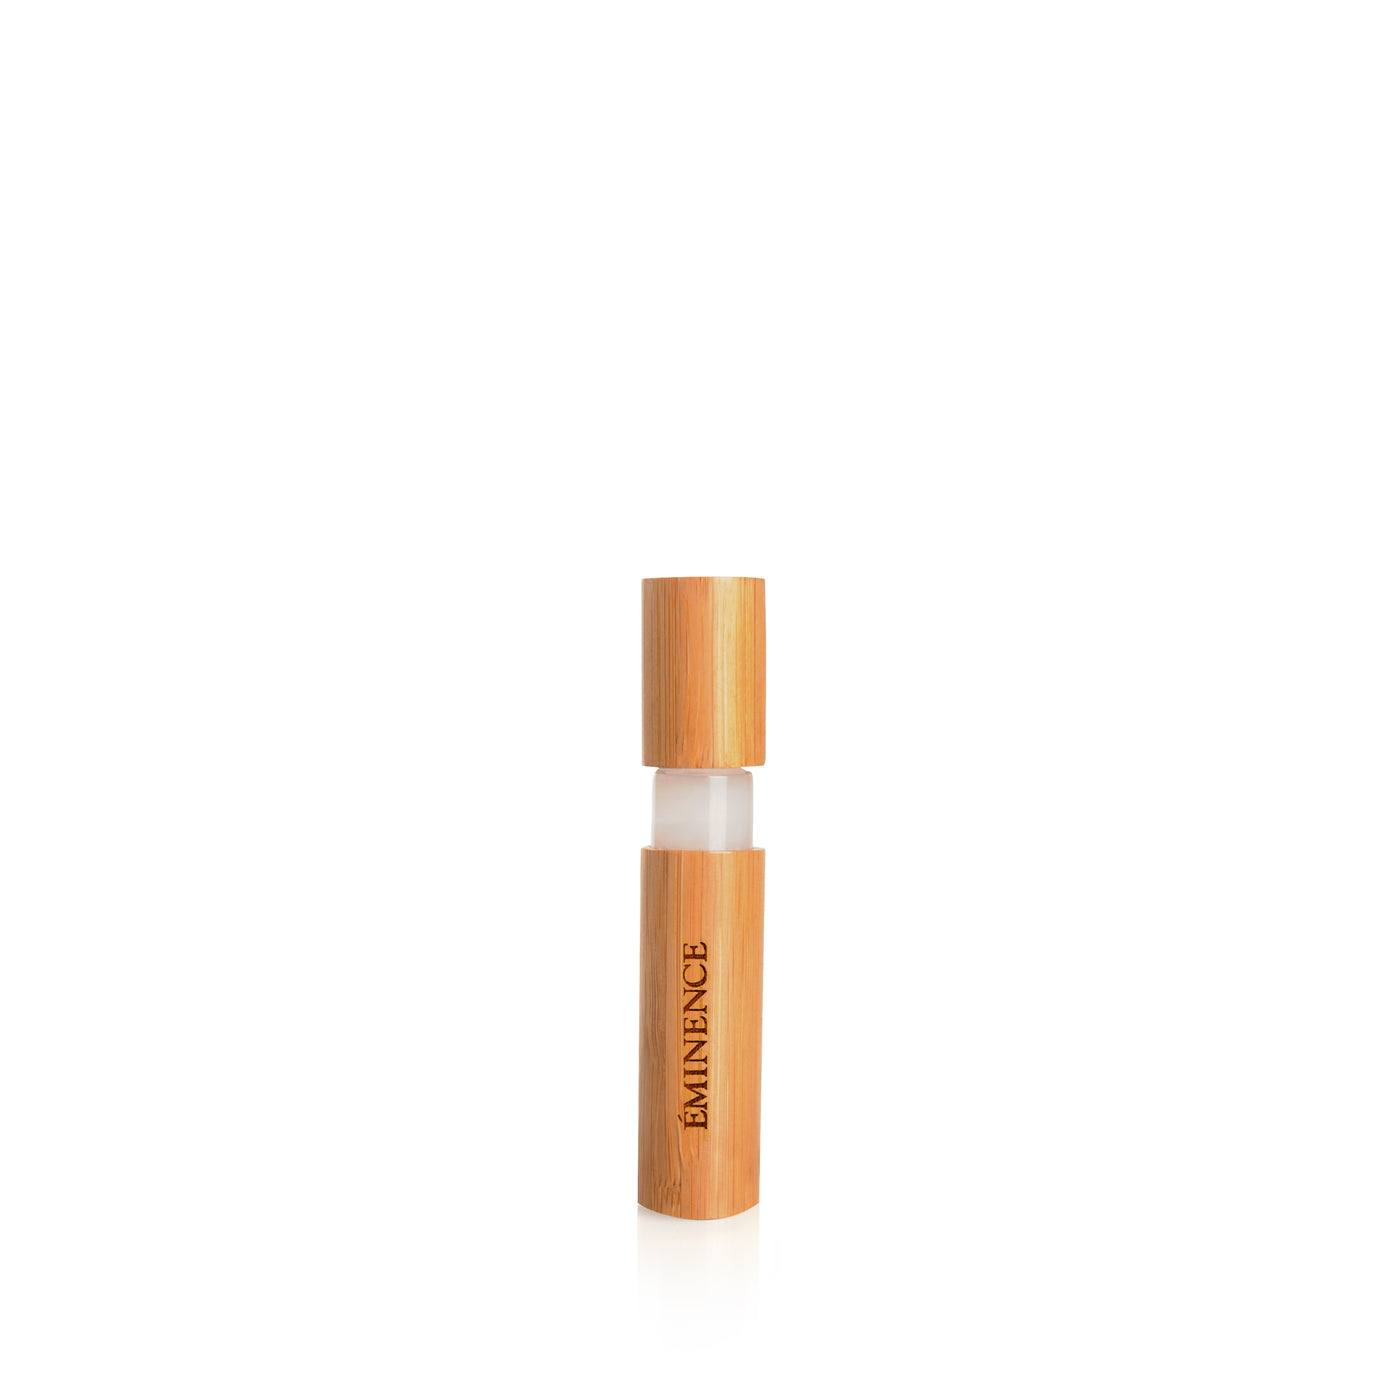 Eminence Organics Cinnamon Kiss Lip Plumper - Radiance Clean Beauty